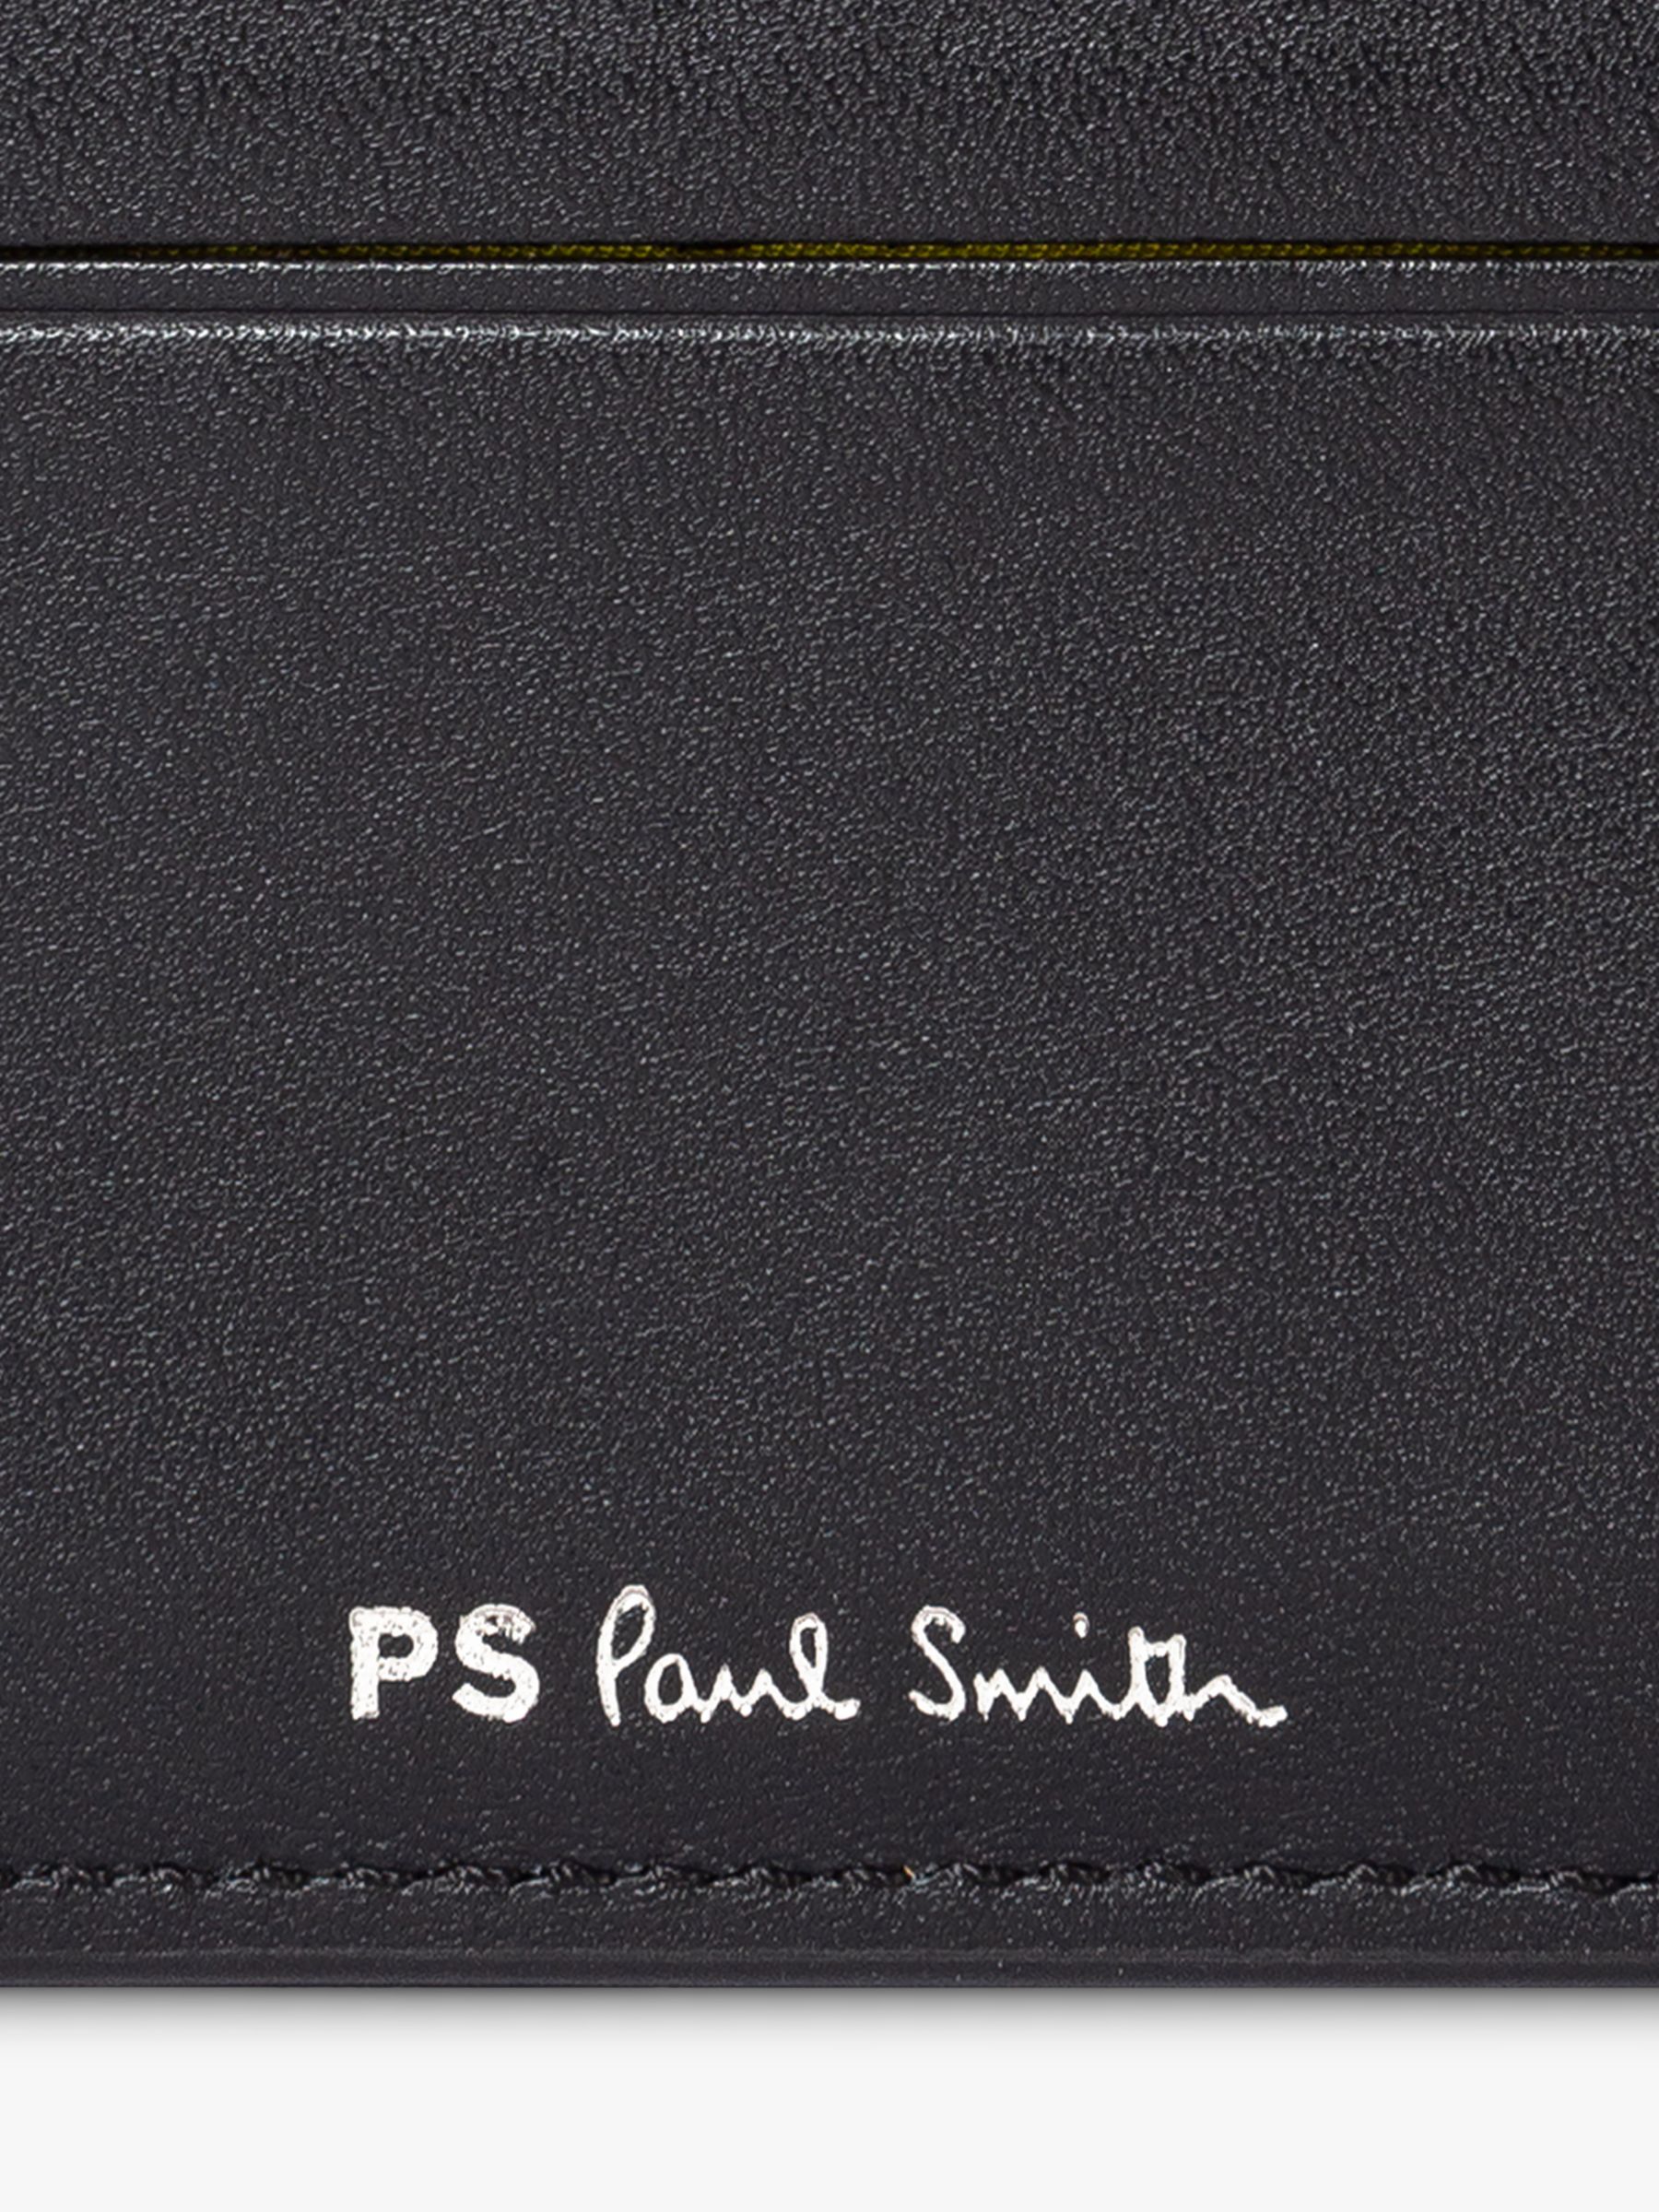 Paul Smith Zebra Leather Card Holder, Black at John Lewis & Partners